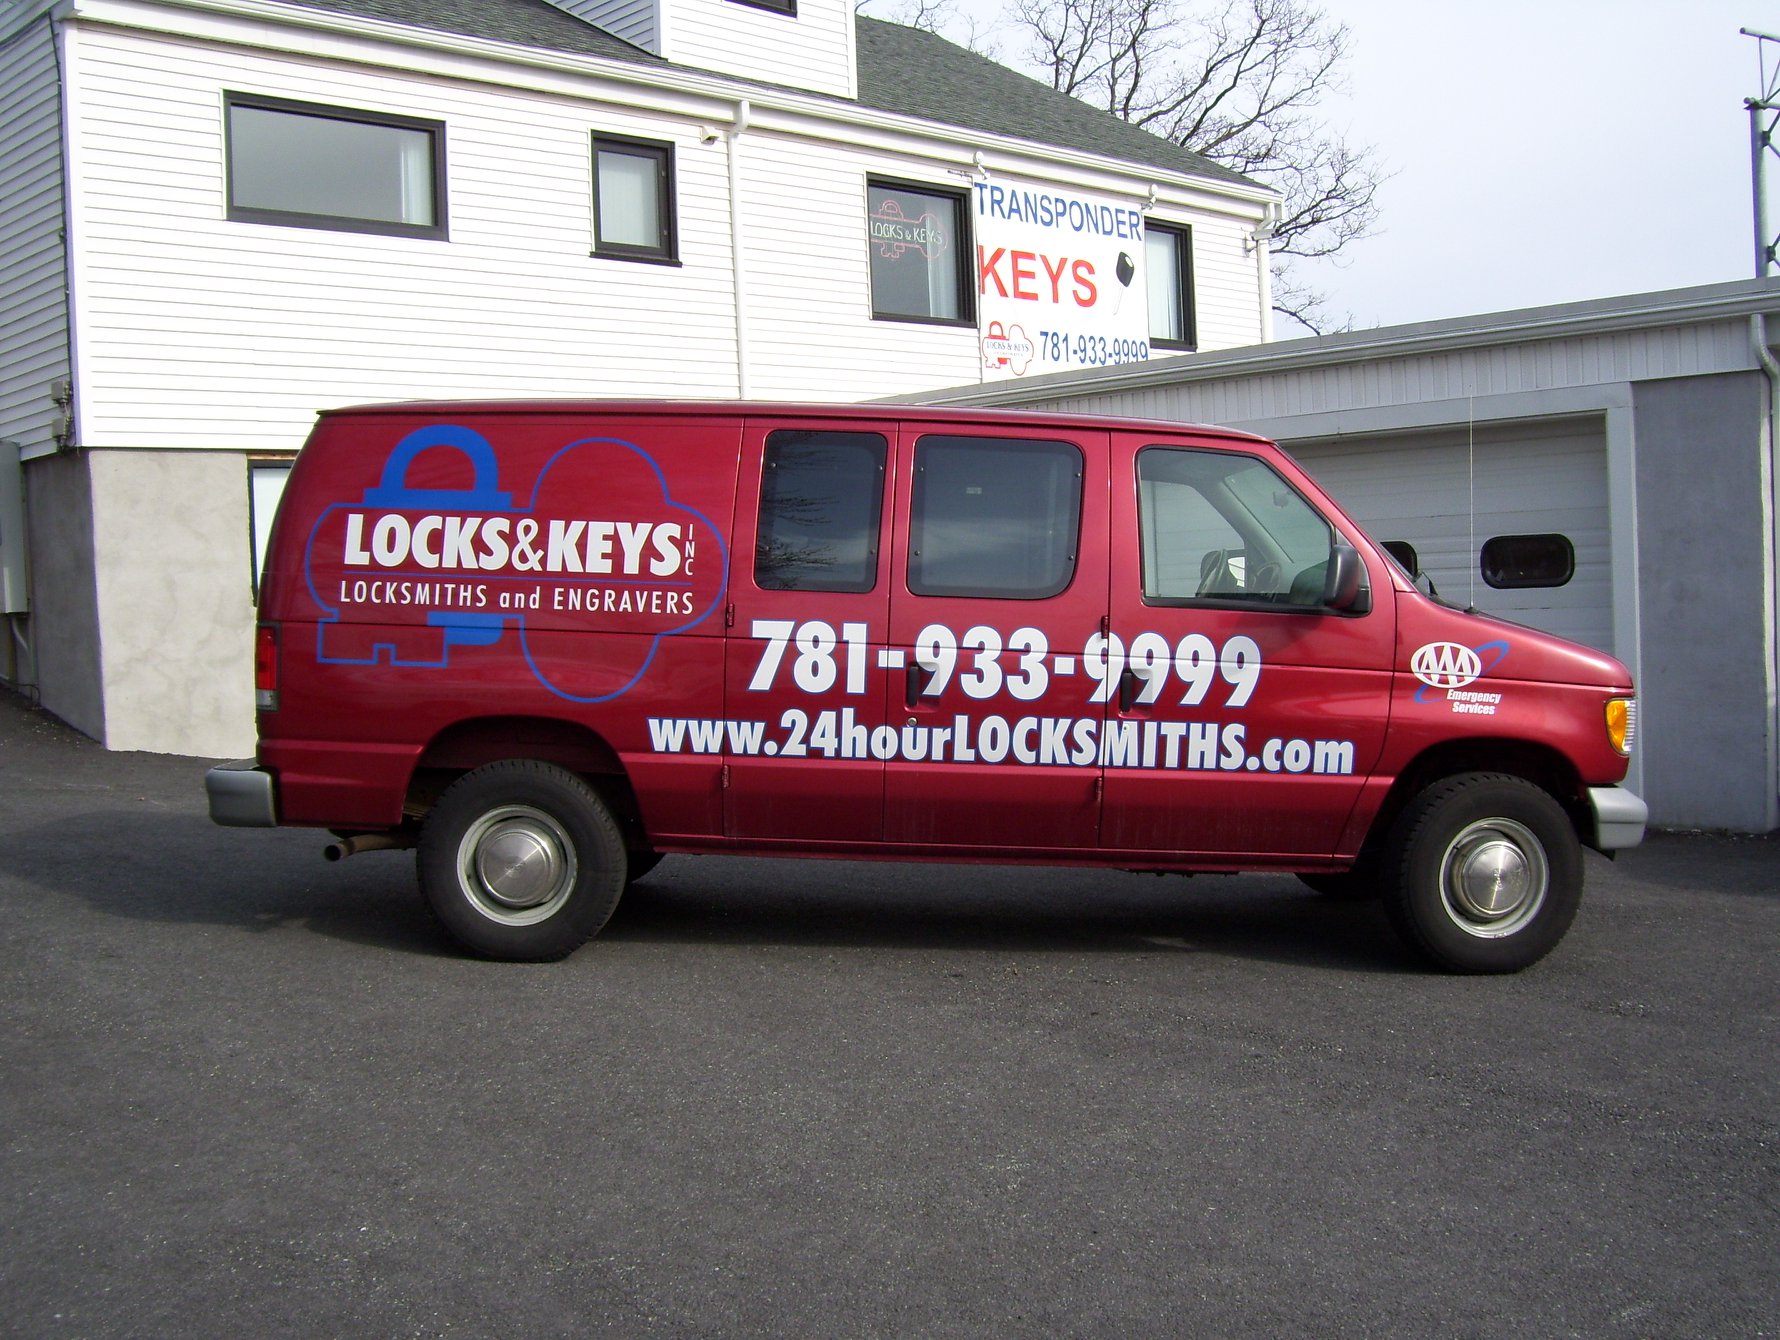 Locks & Keys Inc. - Emergency Services - Medford MA locksmith